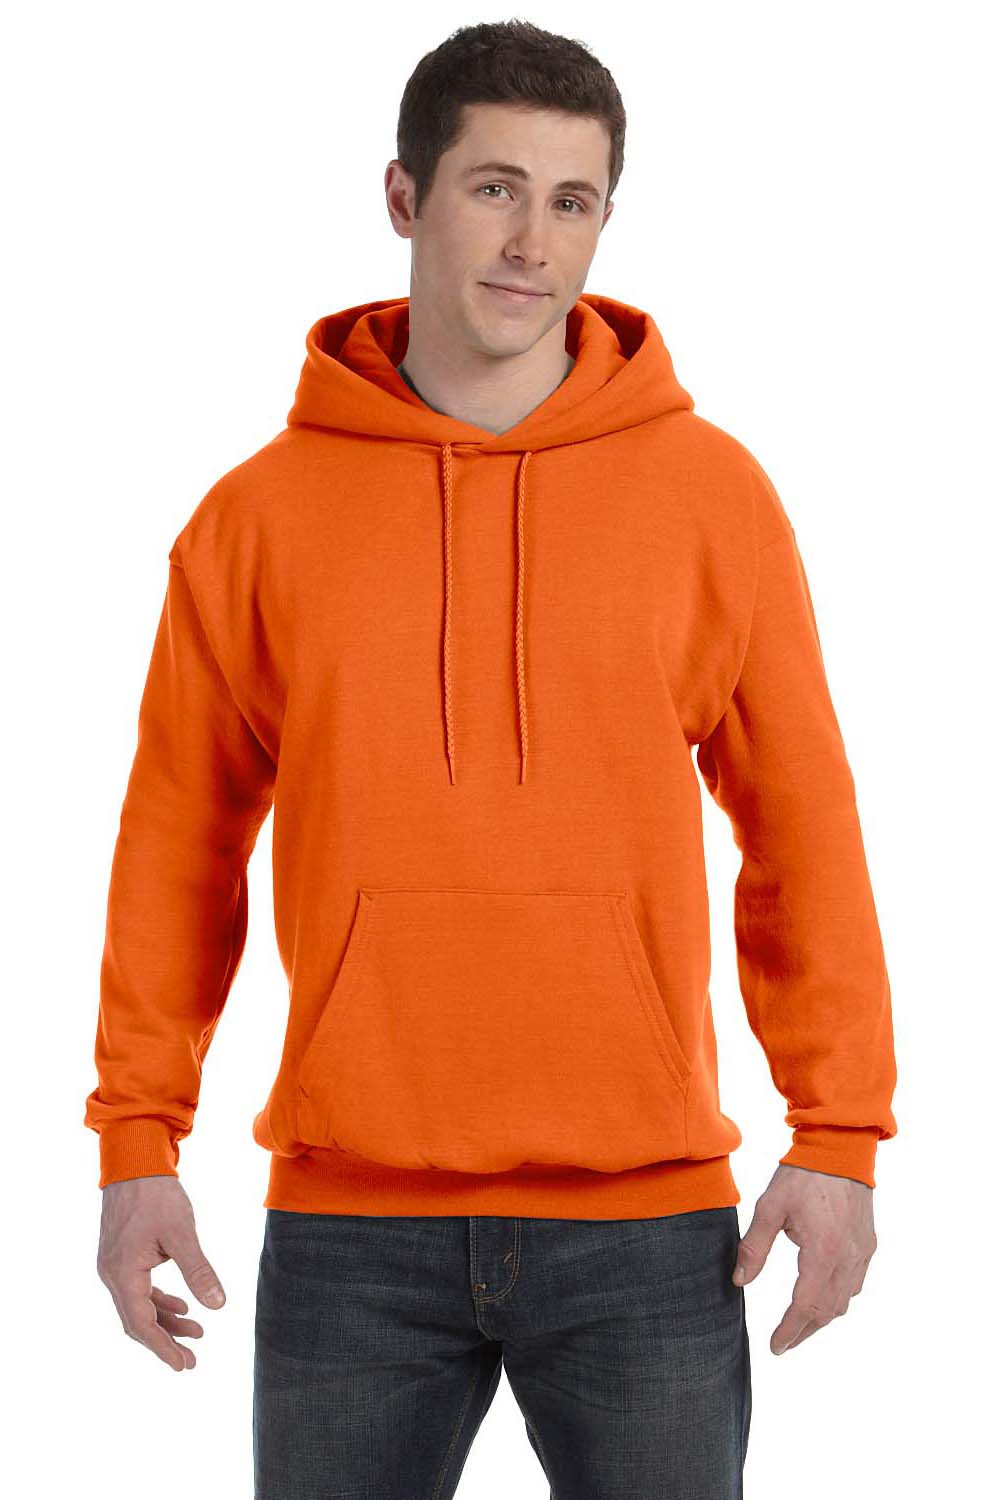 Hanes P170 Mens EcoSmart Print Pro XP Hooded Sweatshirt Hoodie Orange Front